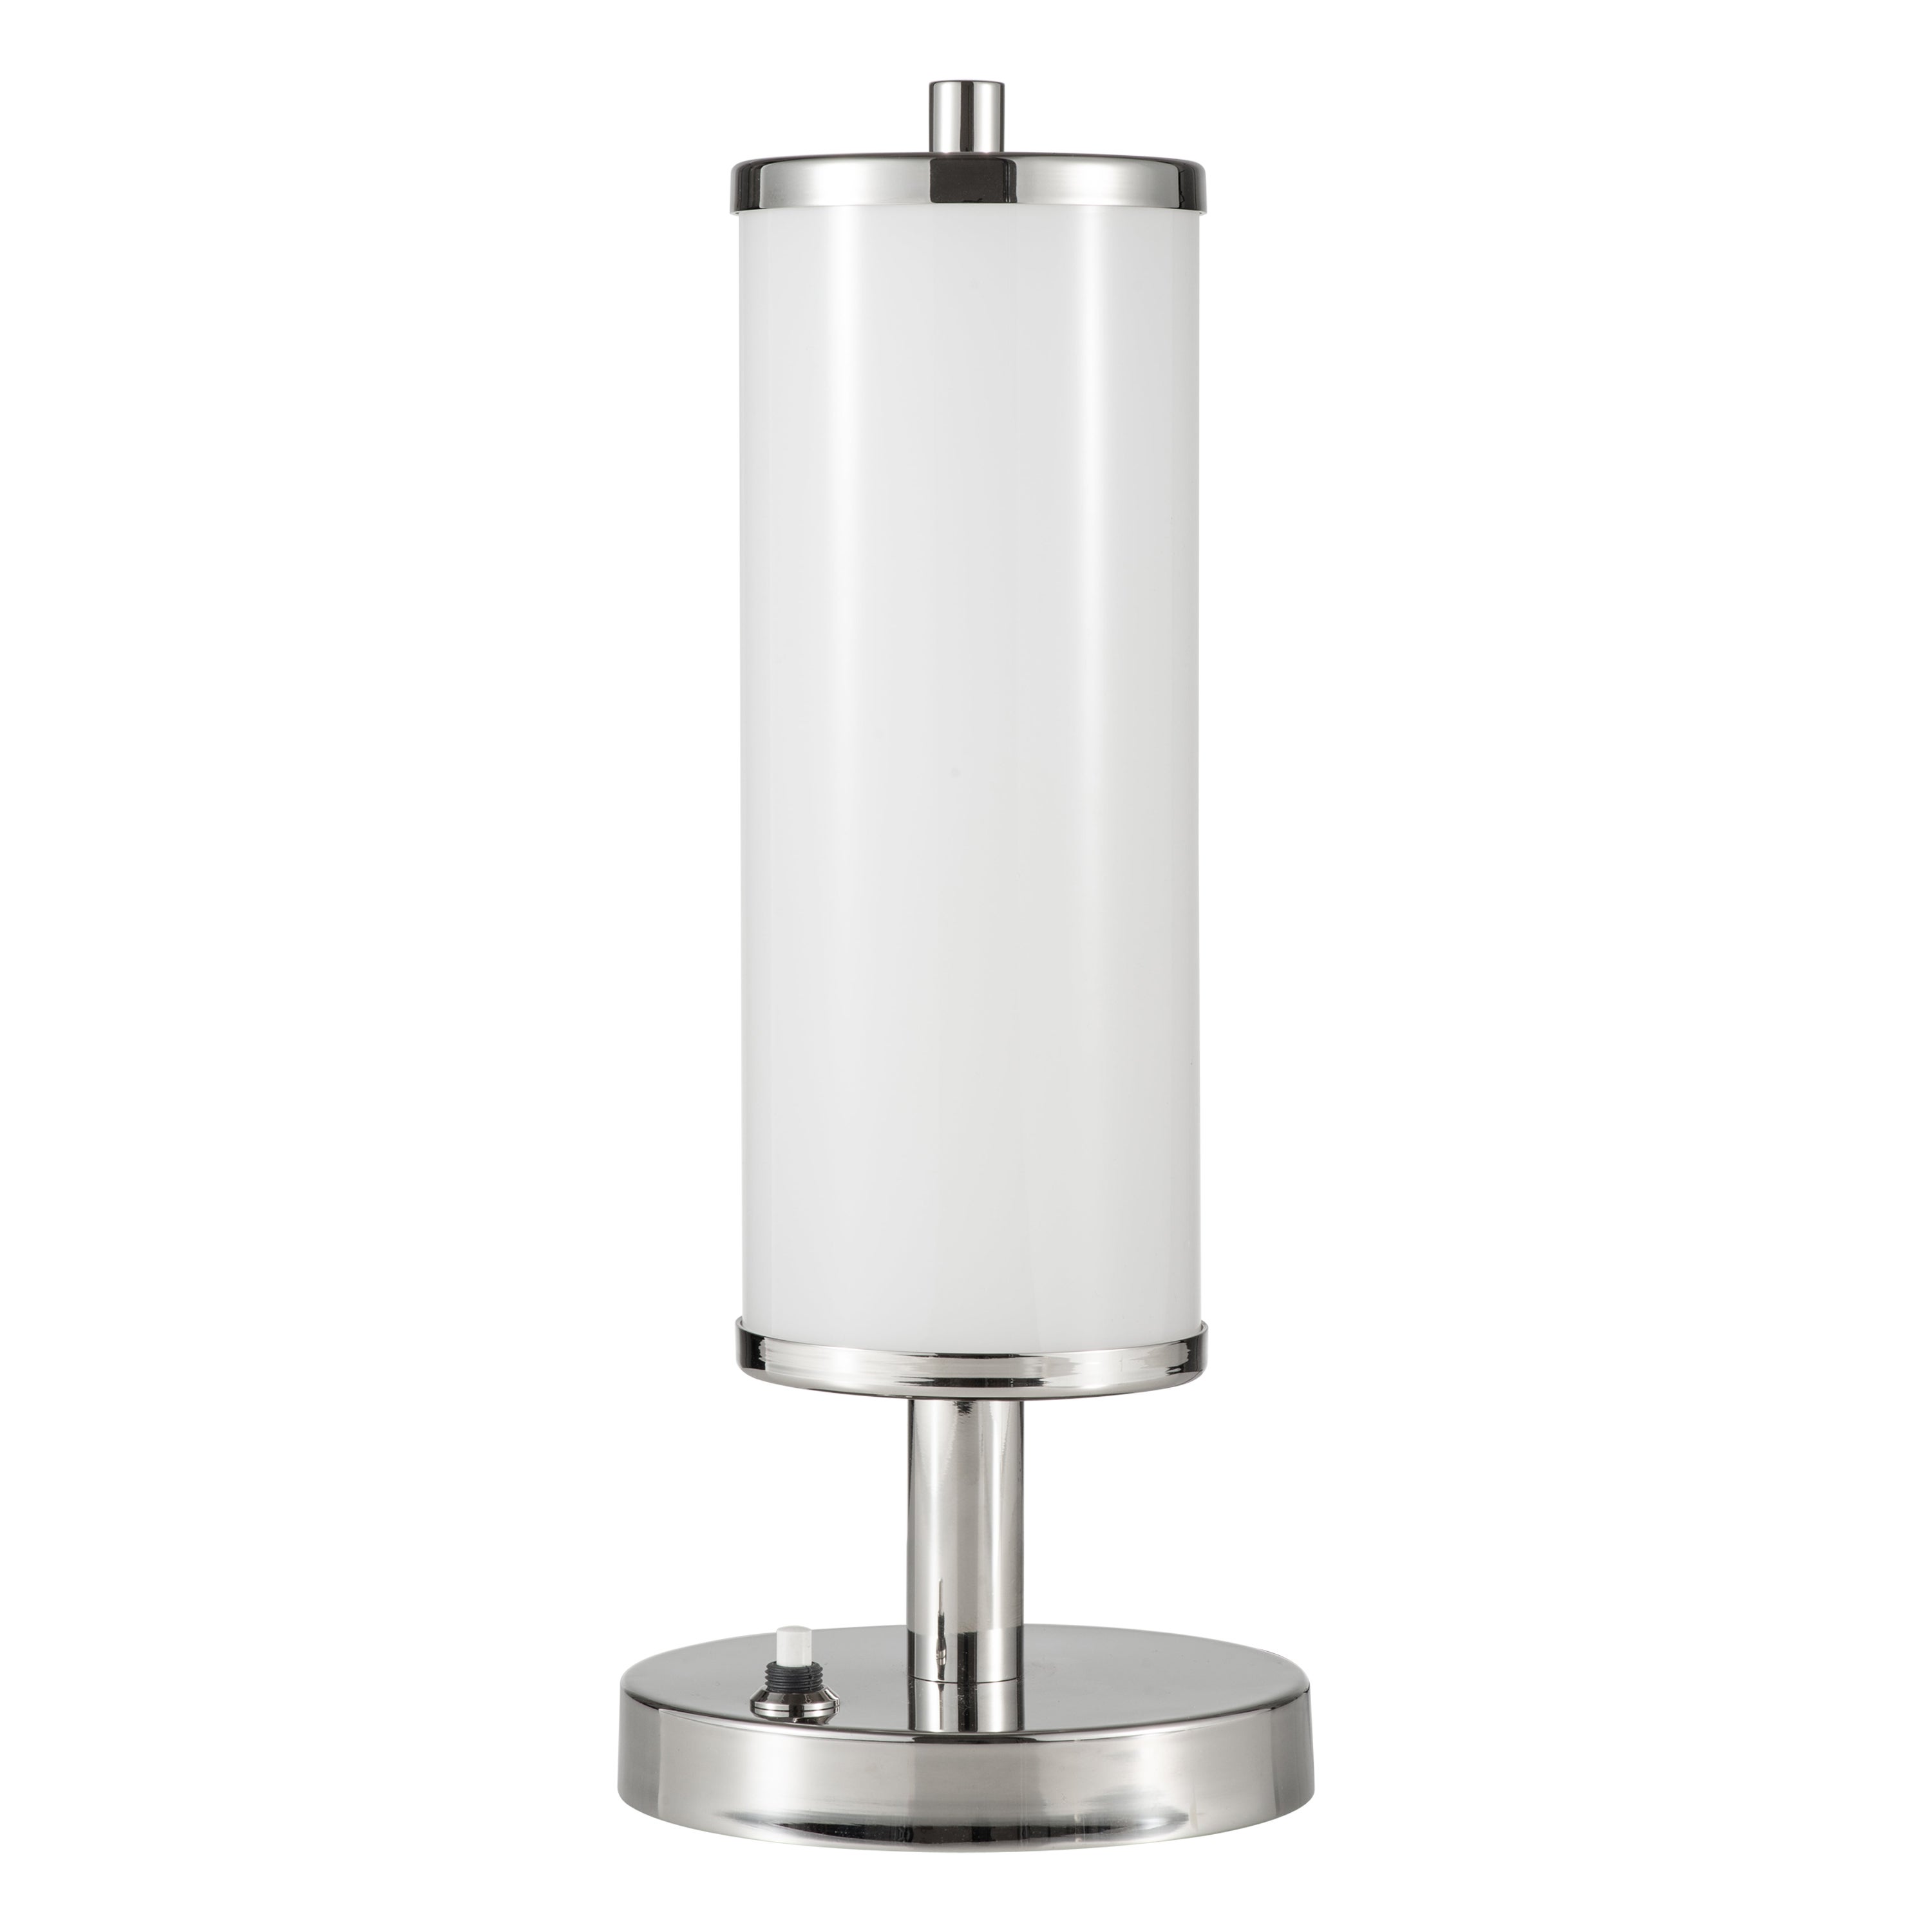 Bauhaus Modernist table lamp manufactured by RETROLUMEN-BERLIN For Sale